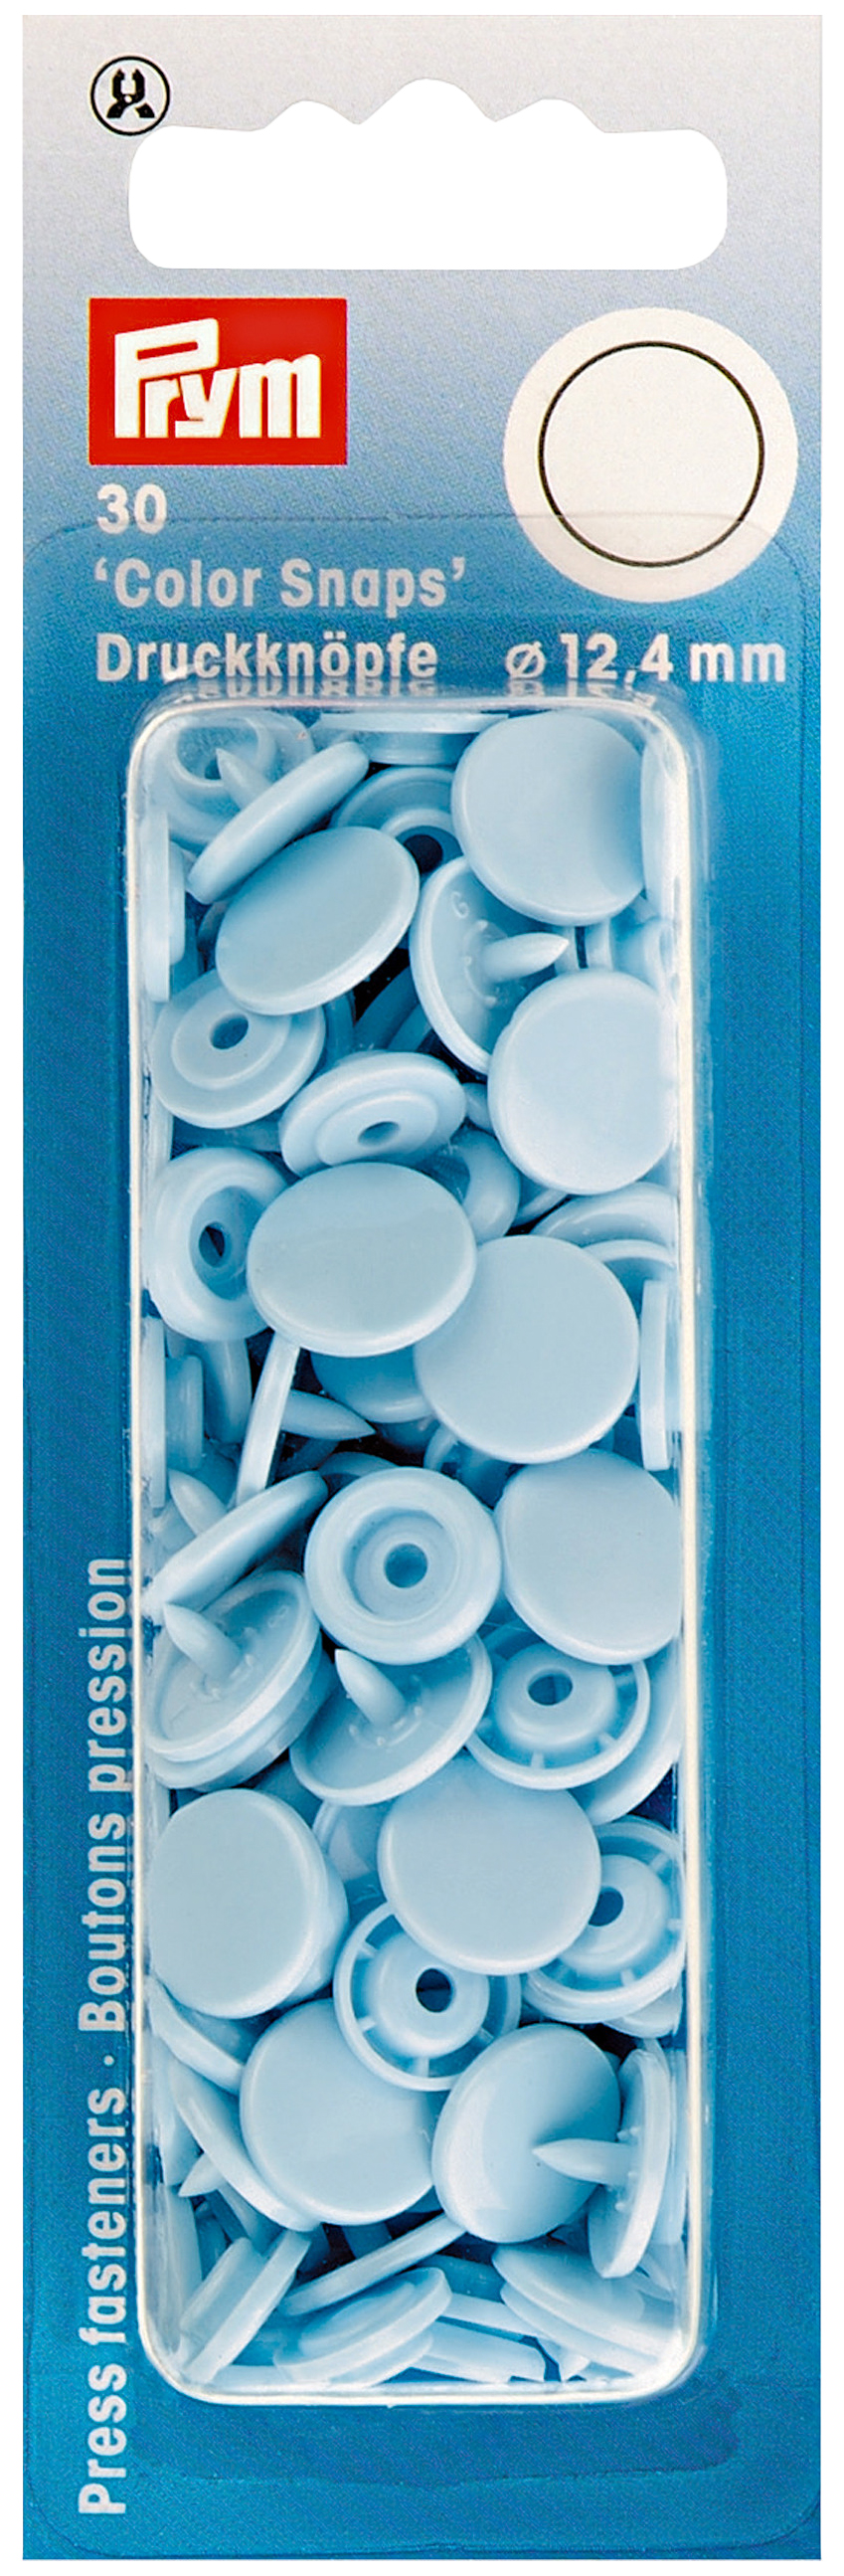 Кнопка Prym 393120 Color Snaps, диаметр 12,4 мм, голубой, 30 шт